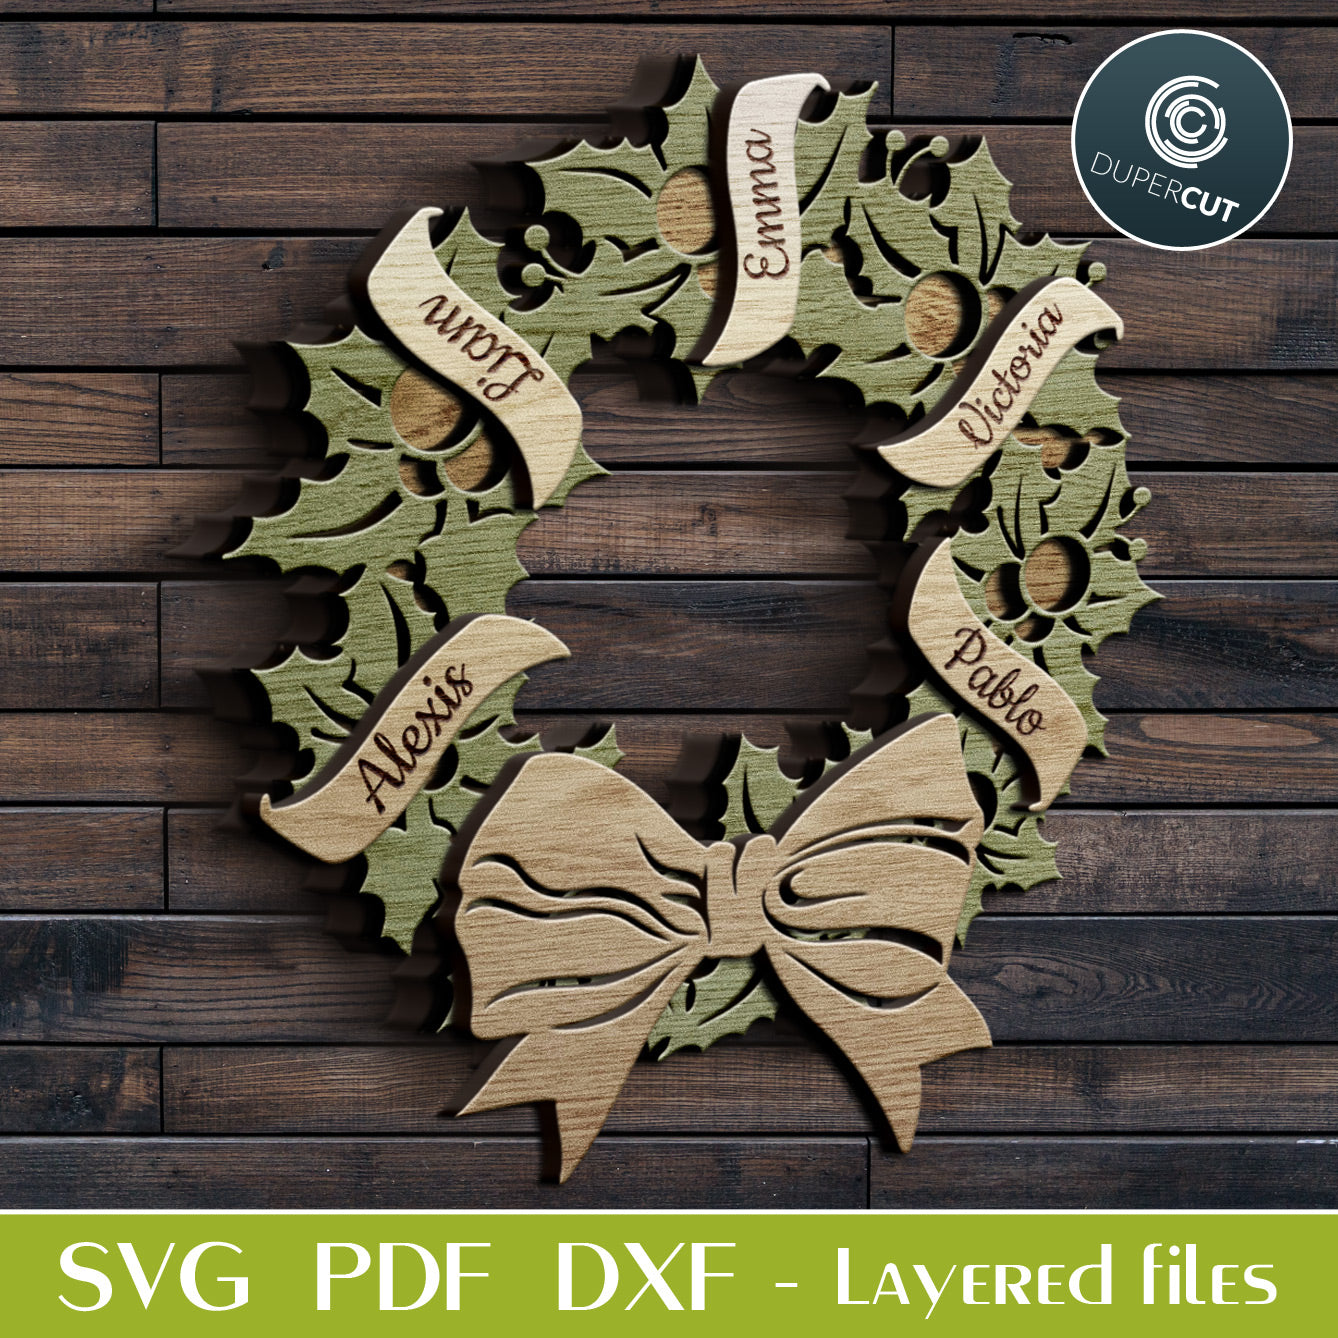 Christmas wreath pattern - add custom text  - SVG DXF layered cutting files for Glowforge, Cricut, scroll saw, CNC plasma machines by DuperCut.com